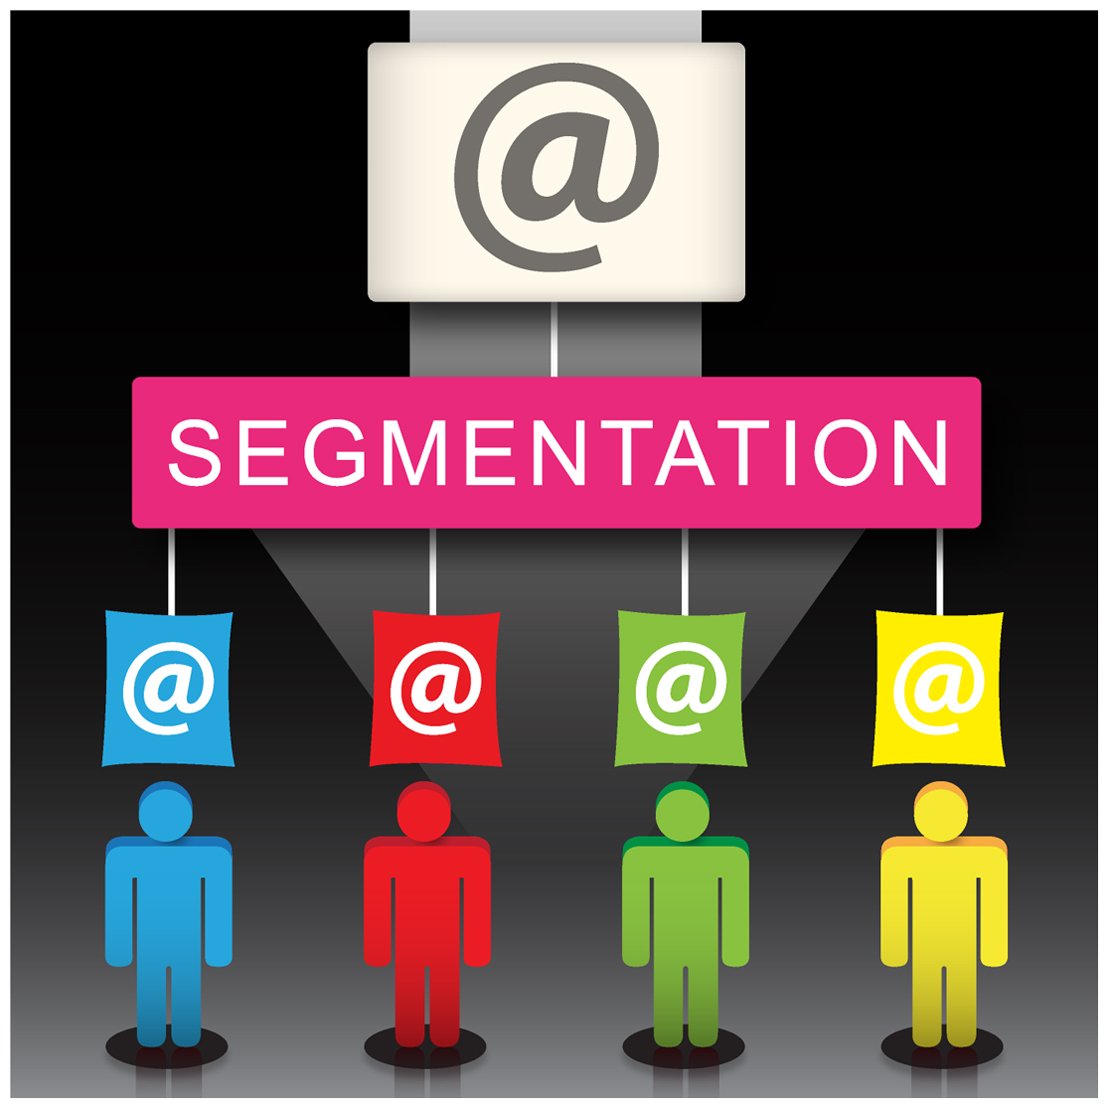 Importance of email segmentation